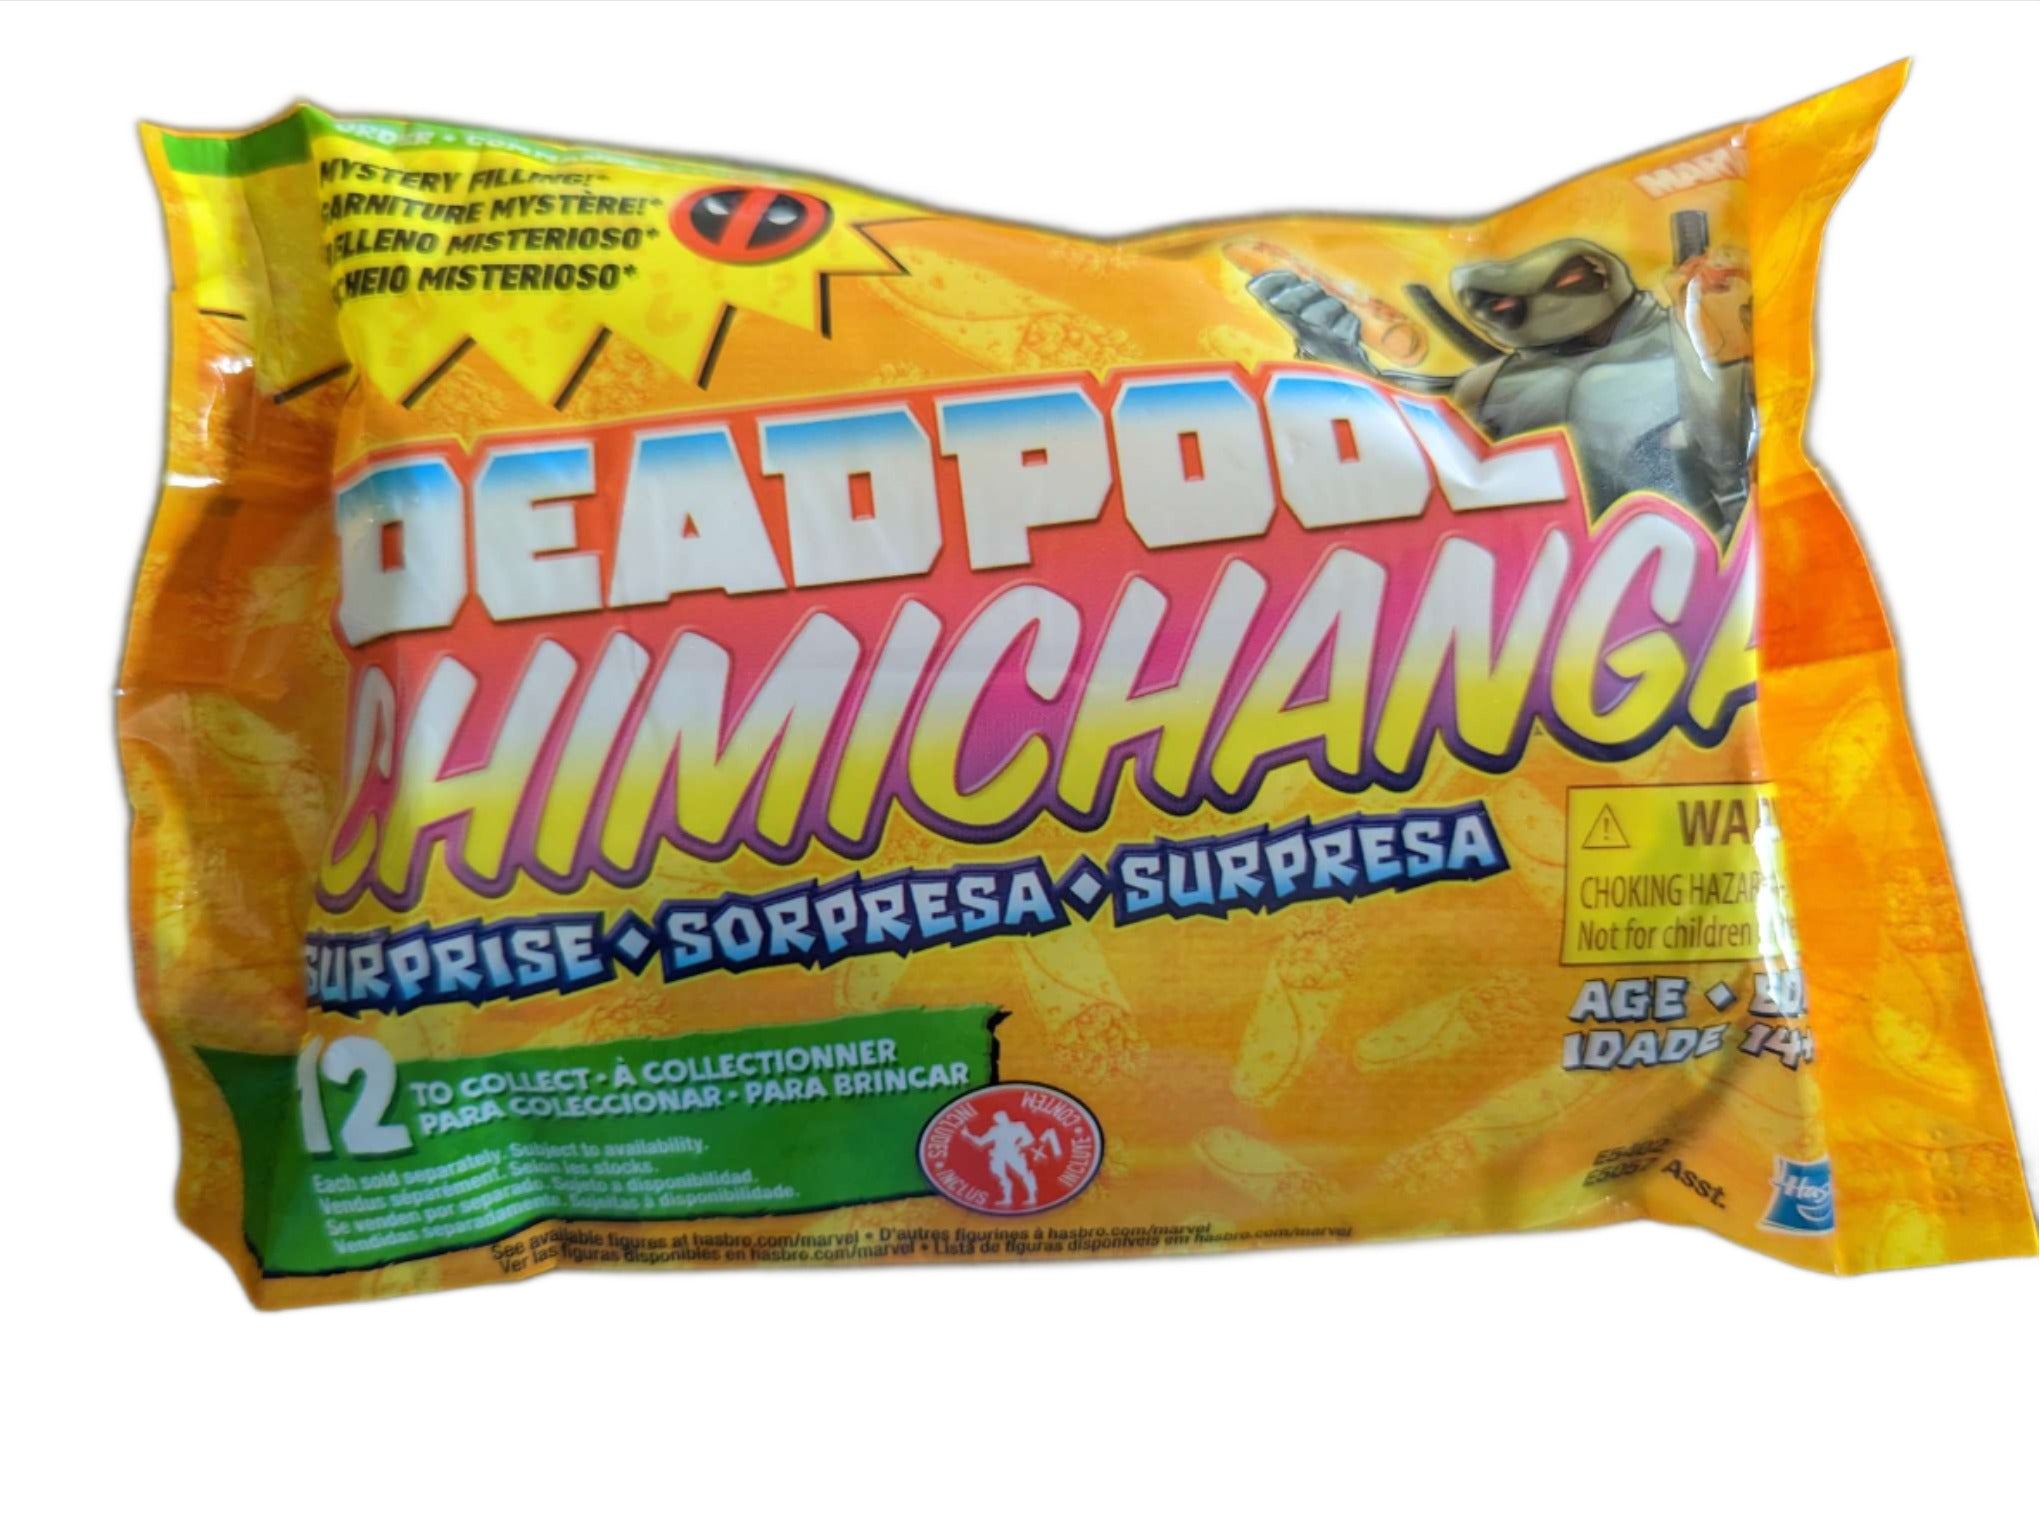 Deadpool Chimichanga - Marvel Collectible - Mystery Mini - 2in Hasbro - New